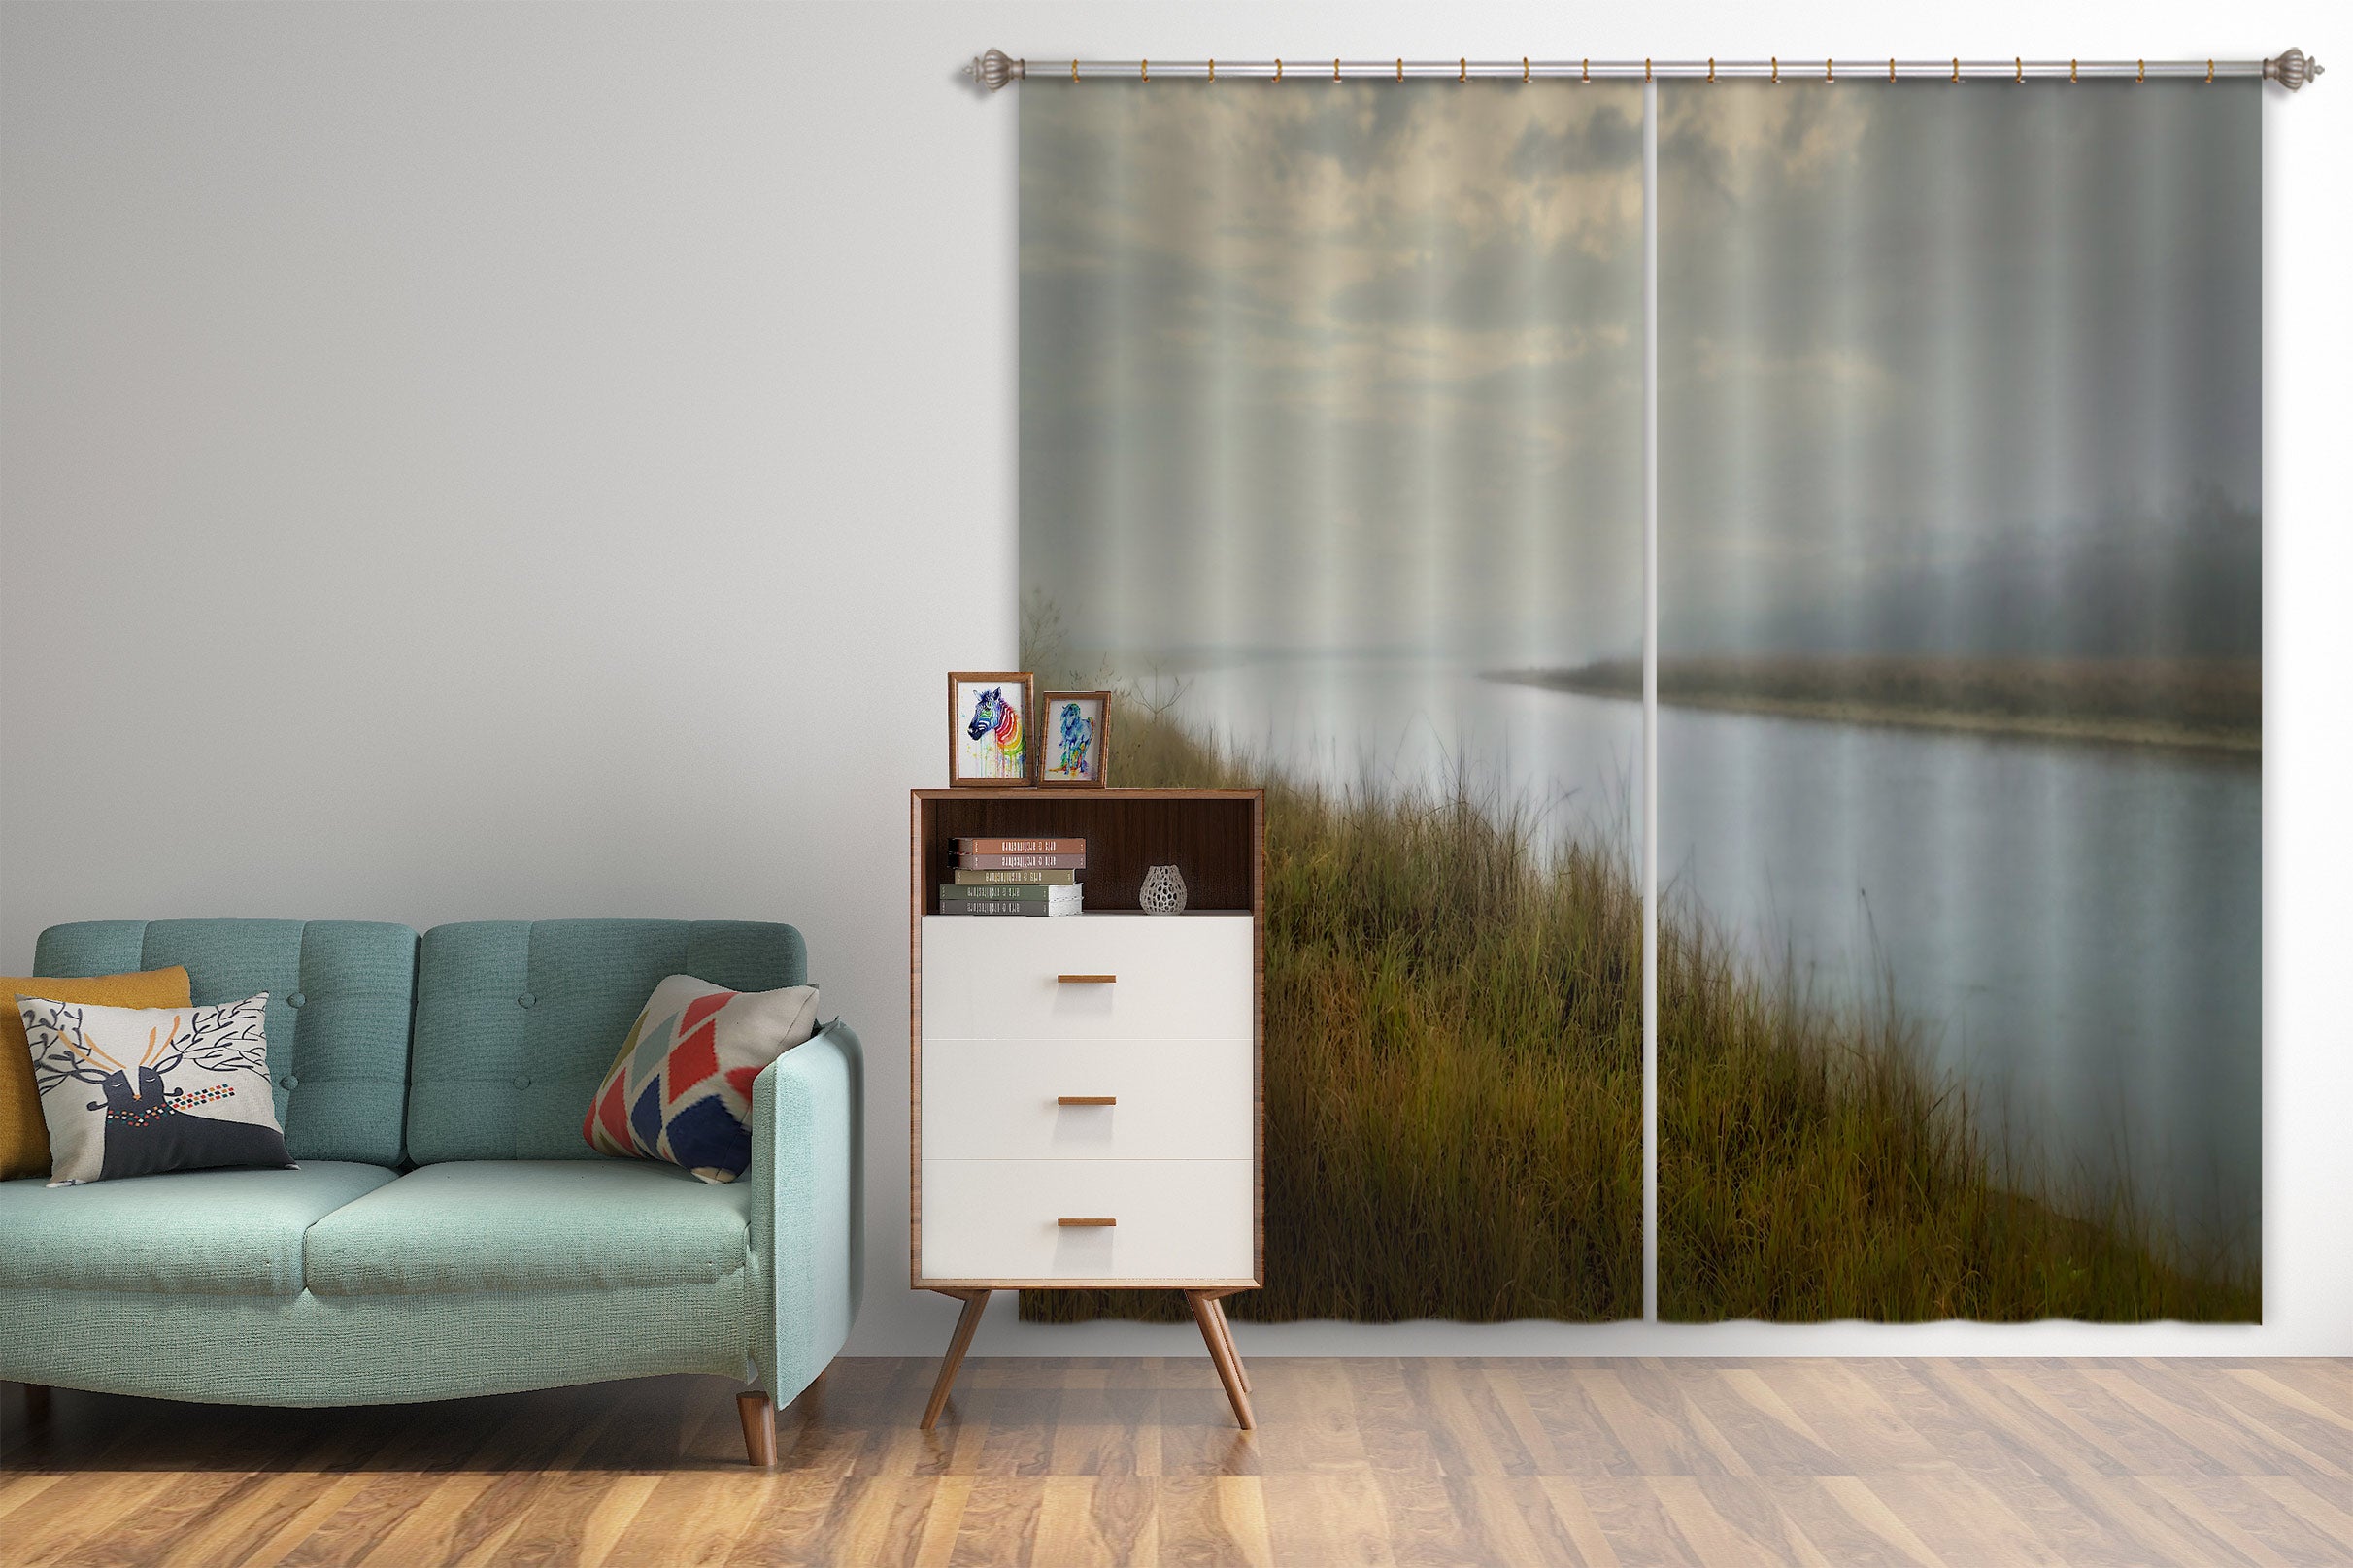 3D Grass River 5337 Beth Sheridan Curtain Curtains Drapes